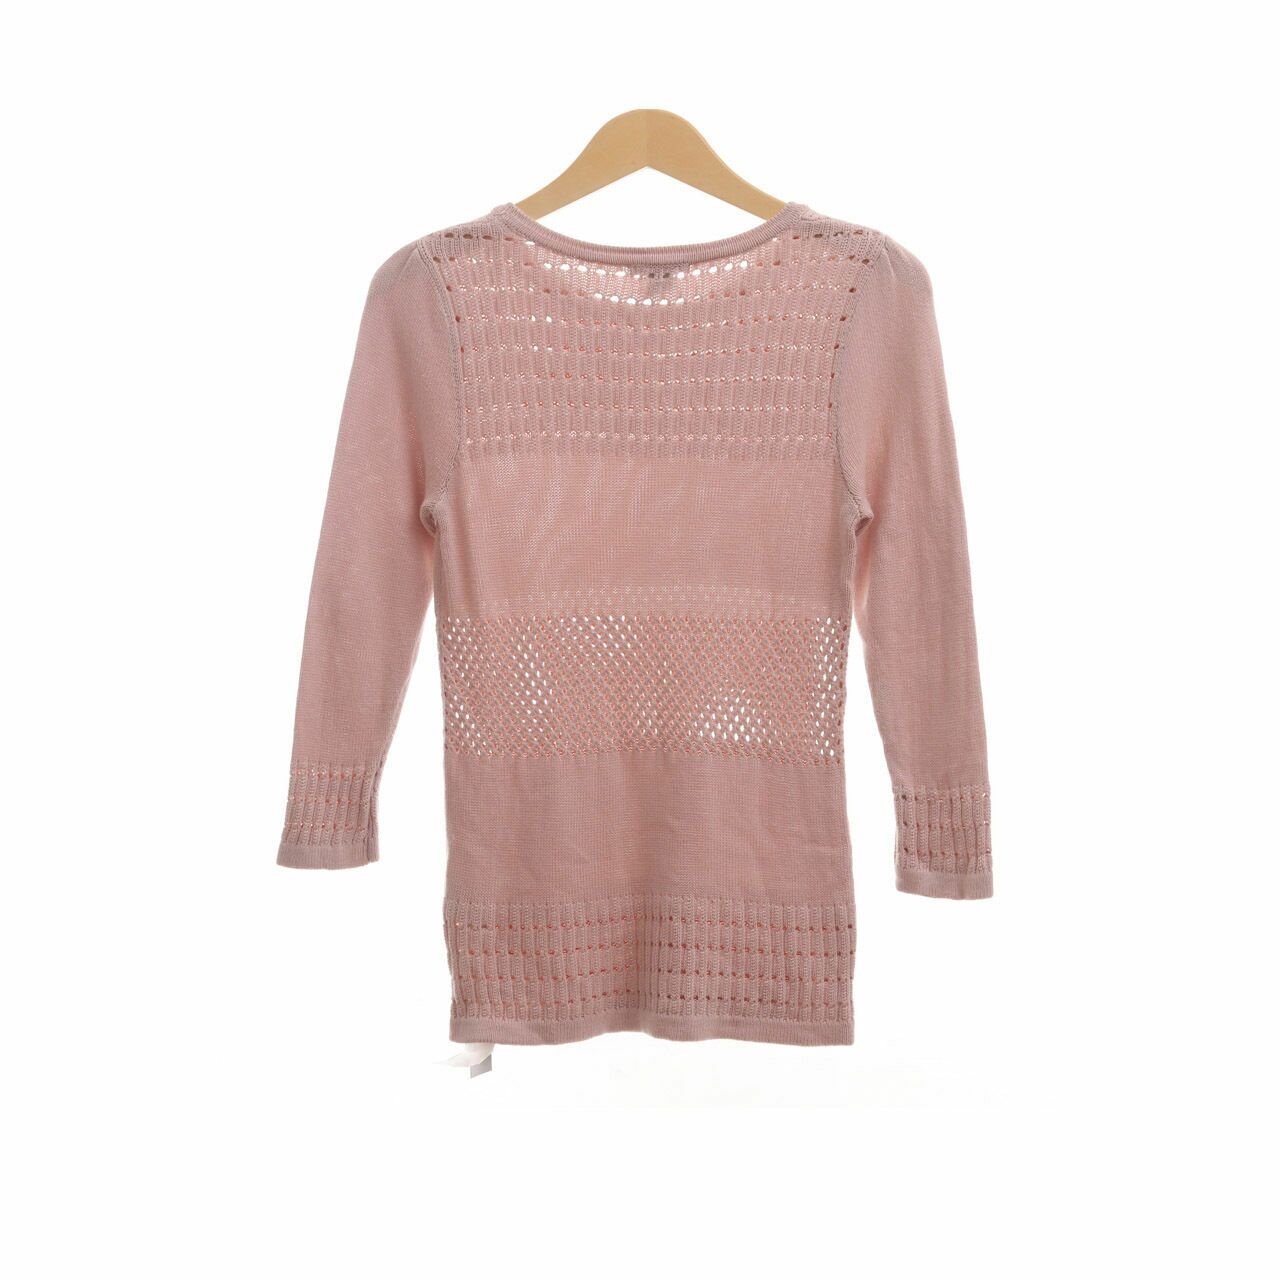 H&M Pink Knit Sweater